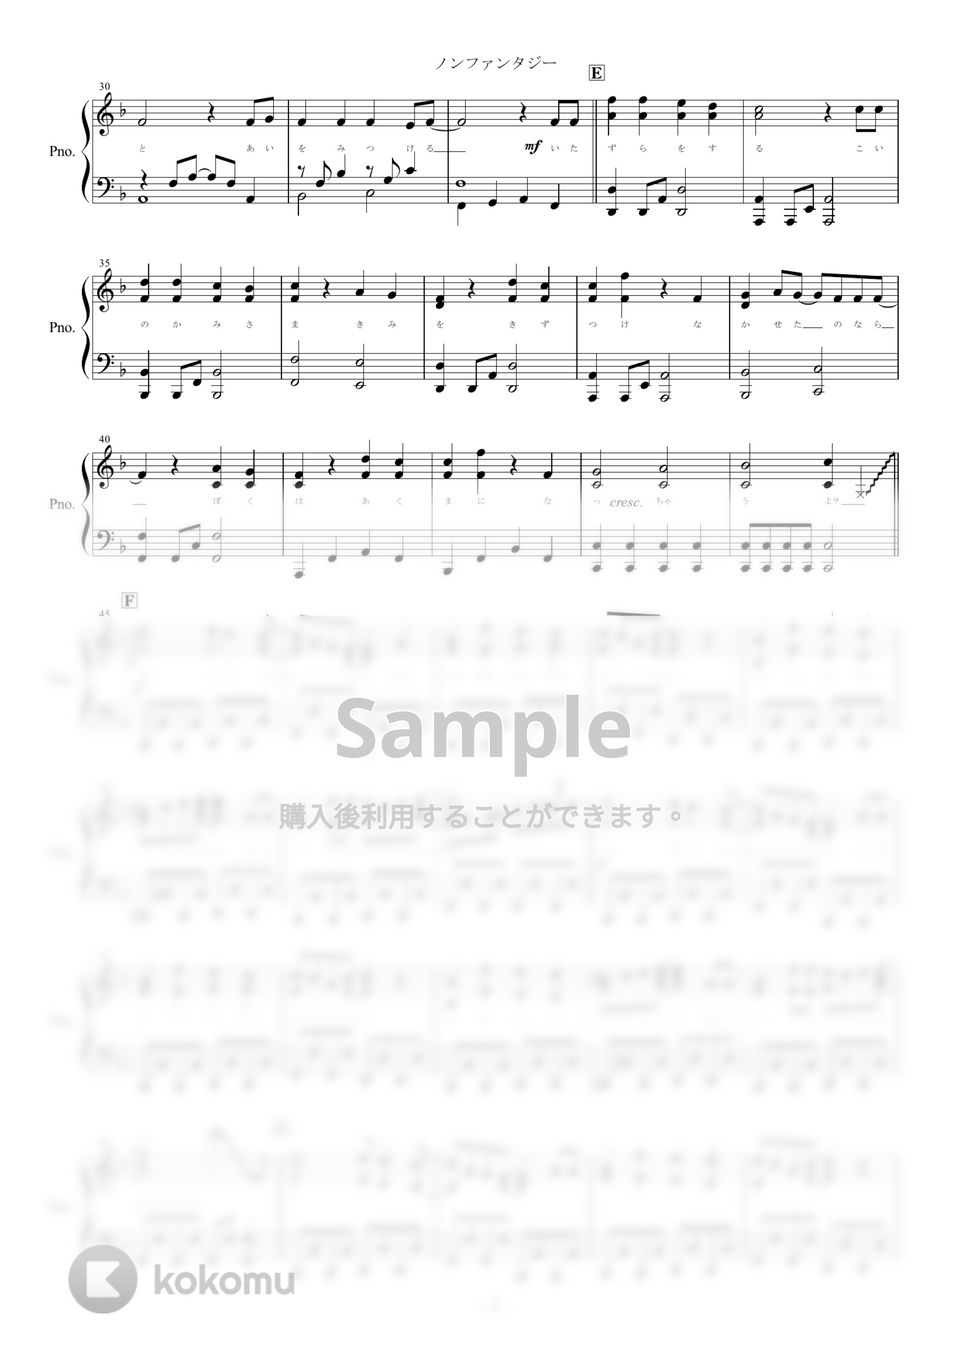 LIP×LIP - ノンファンタジー (ピアノ楽譜/全６ページ) by yoshi